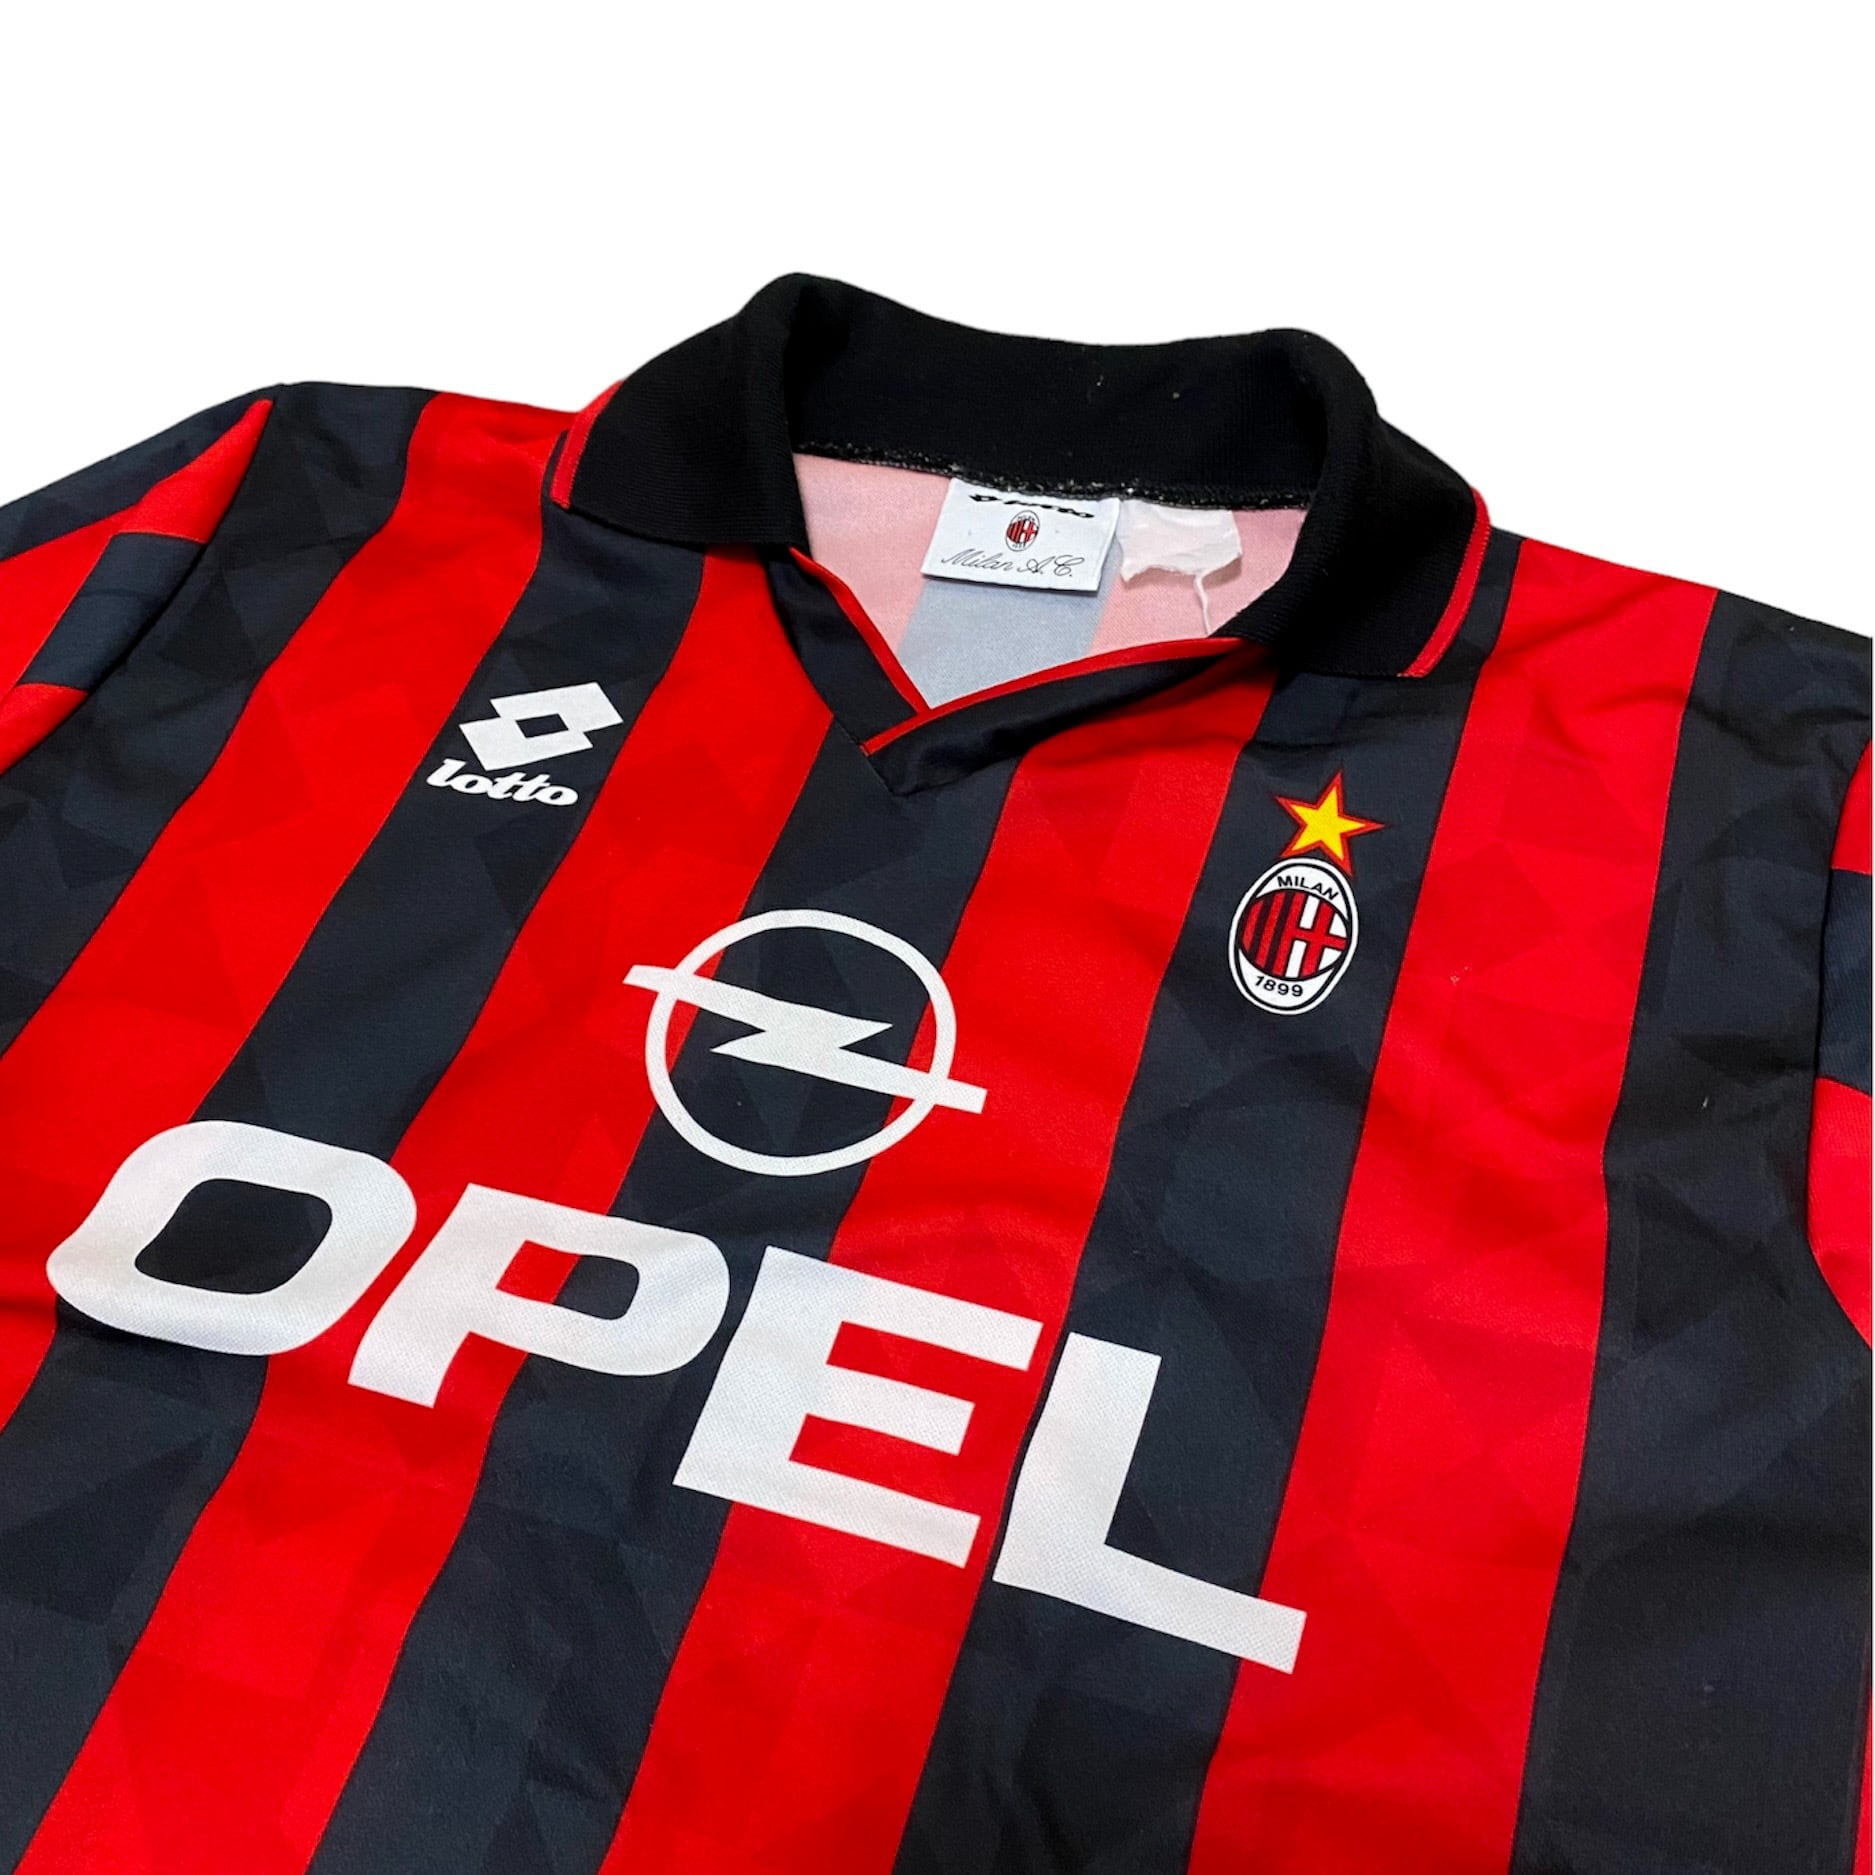 90's lotto ”AC Milan” Football Shirt ACミラン フットボール サッカー ユニフォーム シャツ スポーツ 古着  ヴィンテージ WhiteHeadEagle